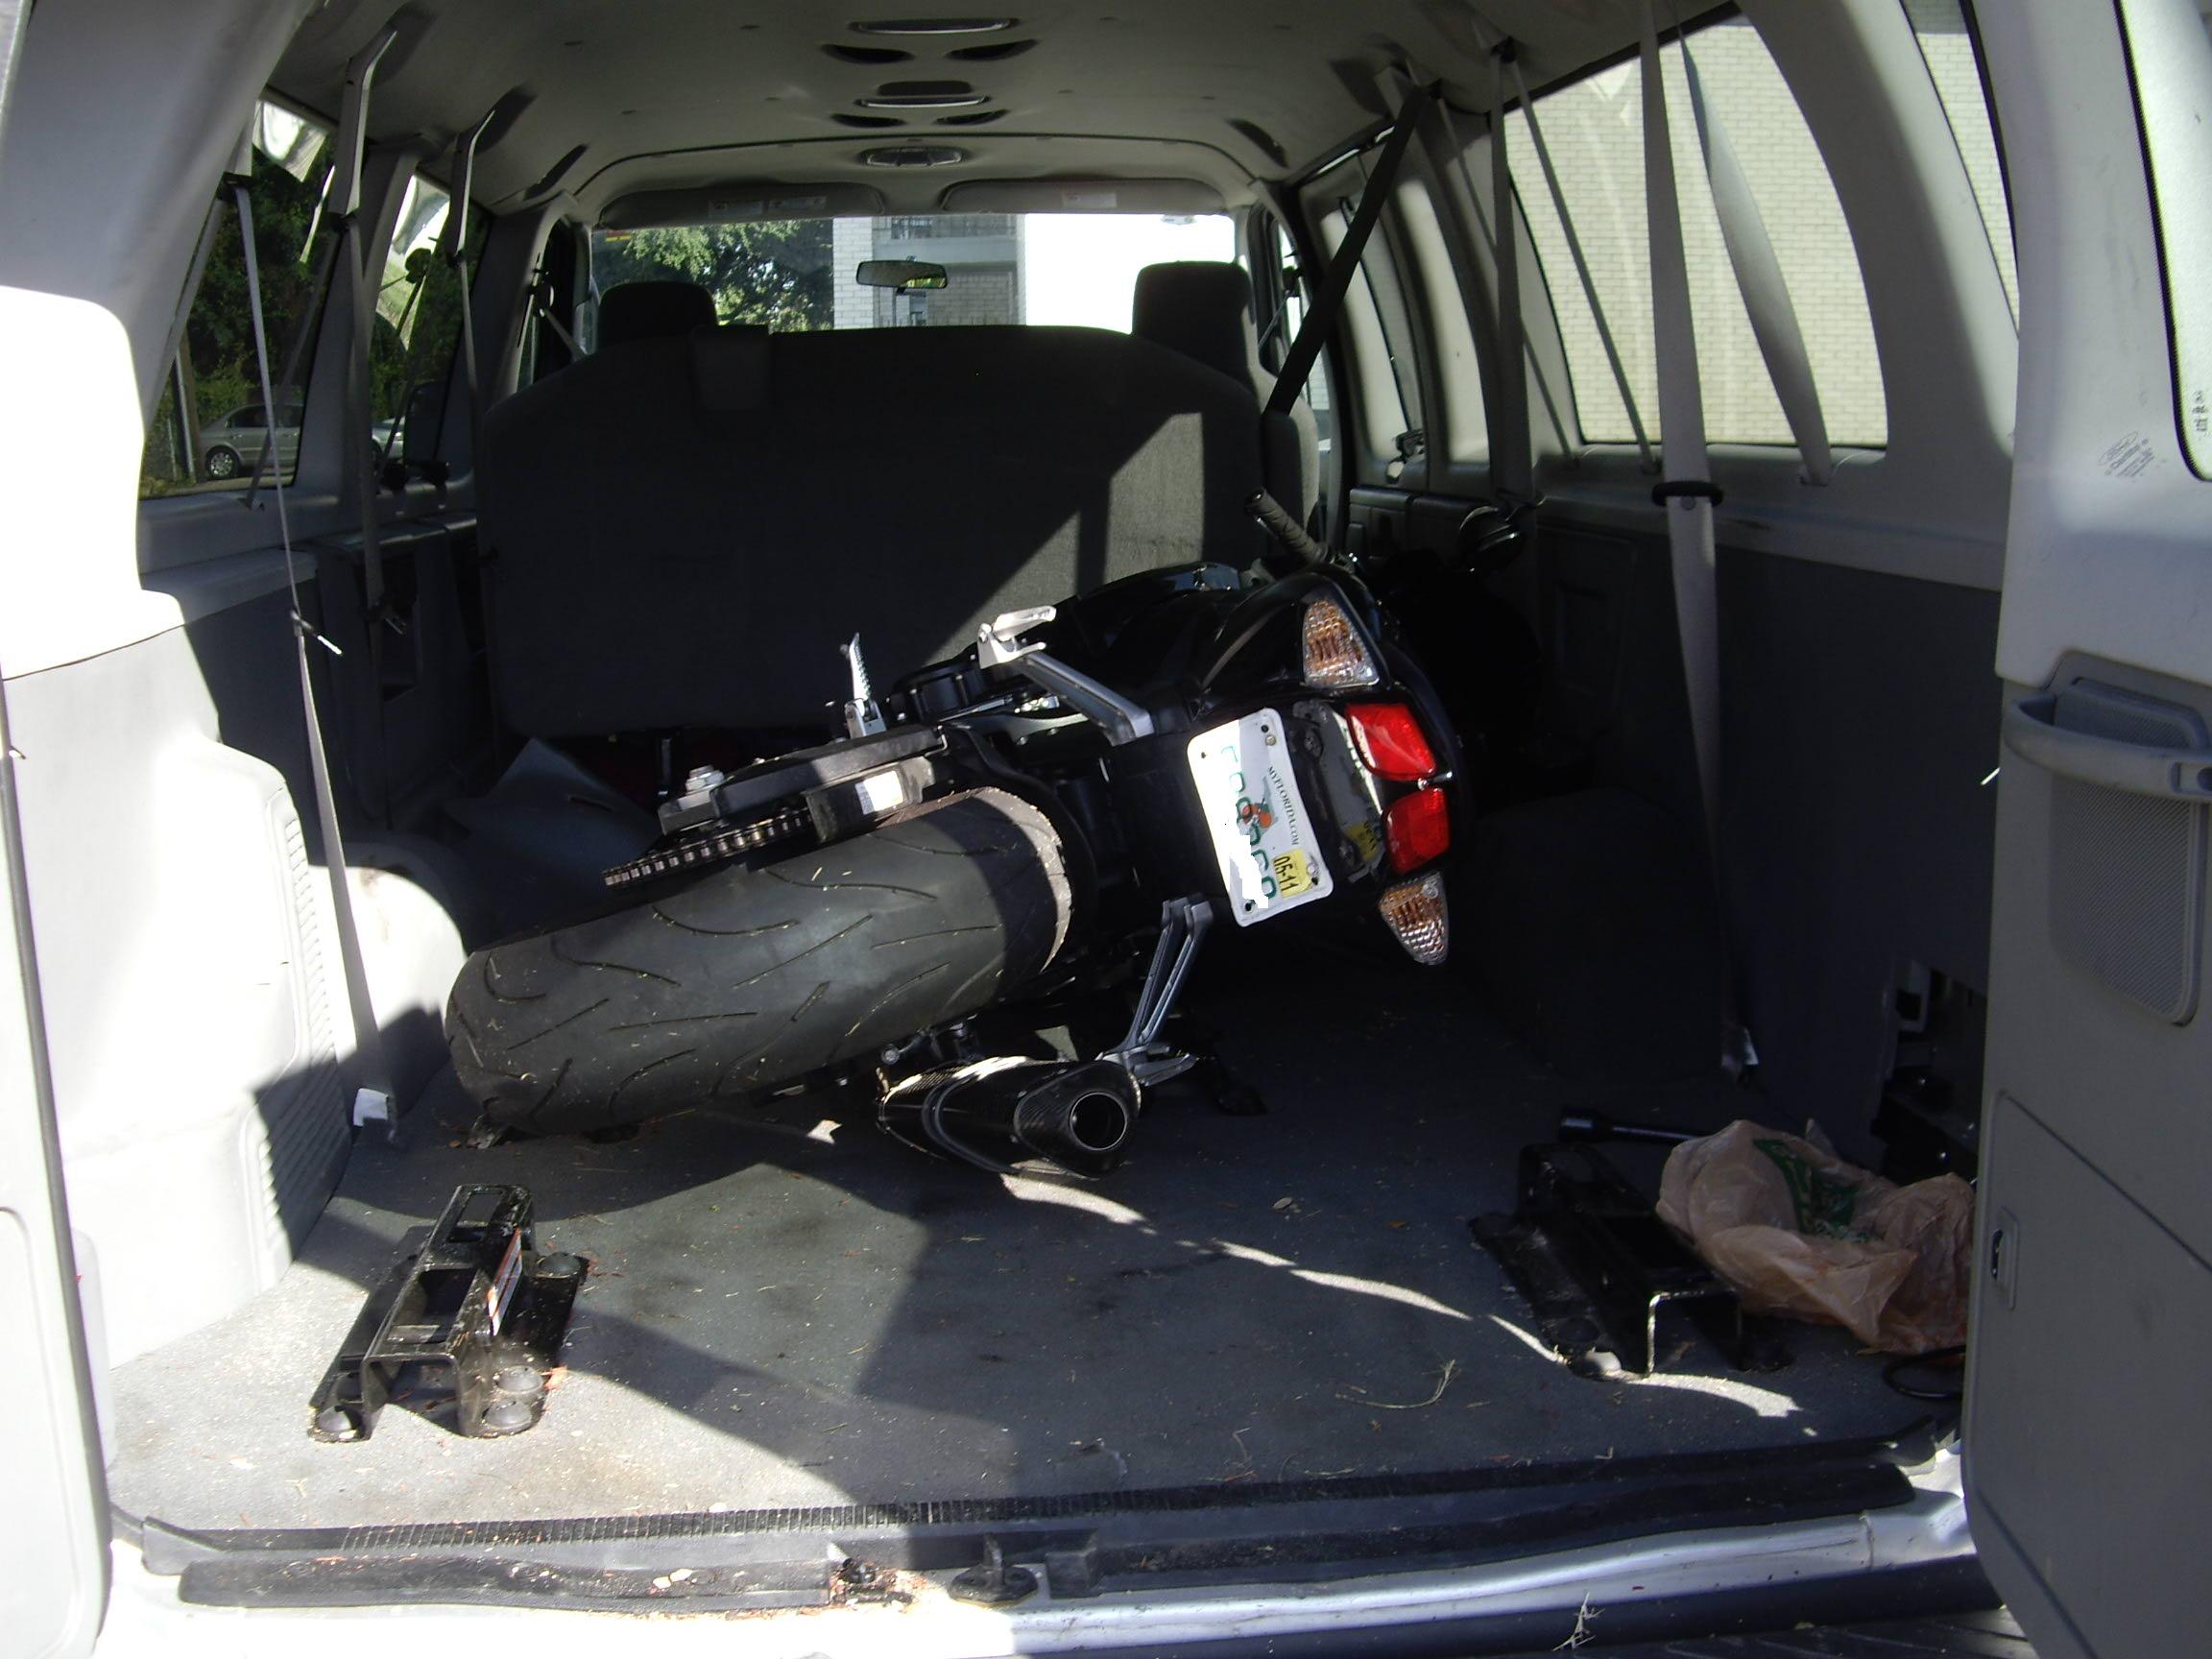 Stolen Motorbike recovery by police in lakeland, fl